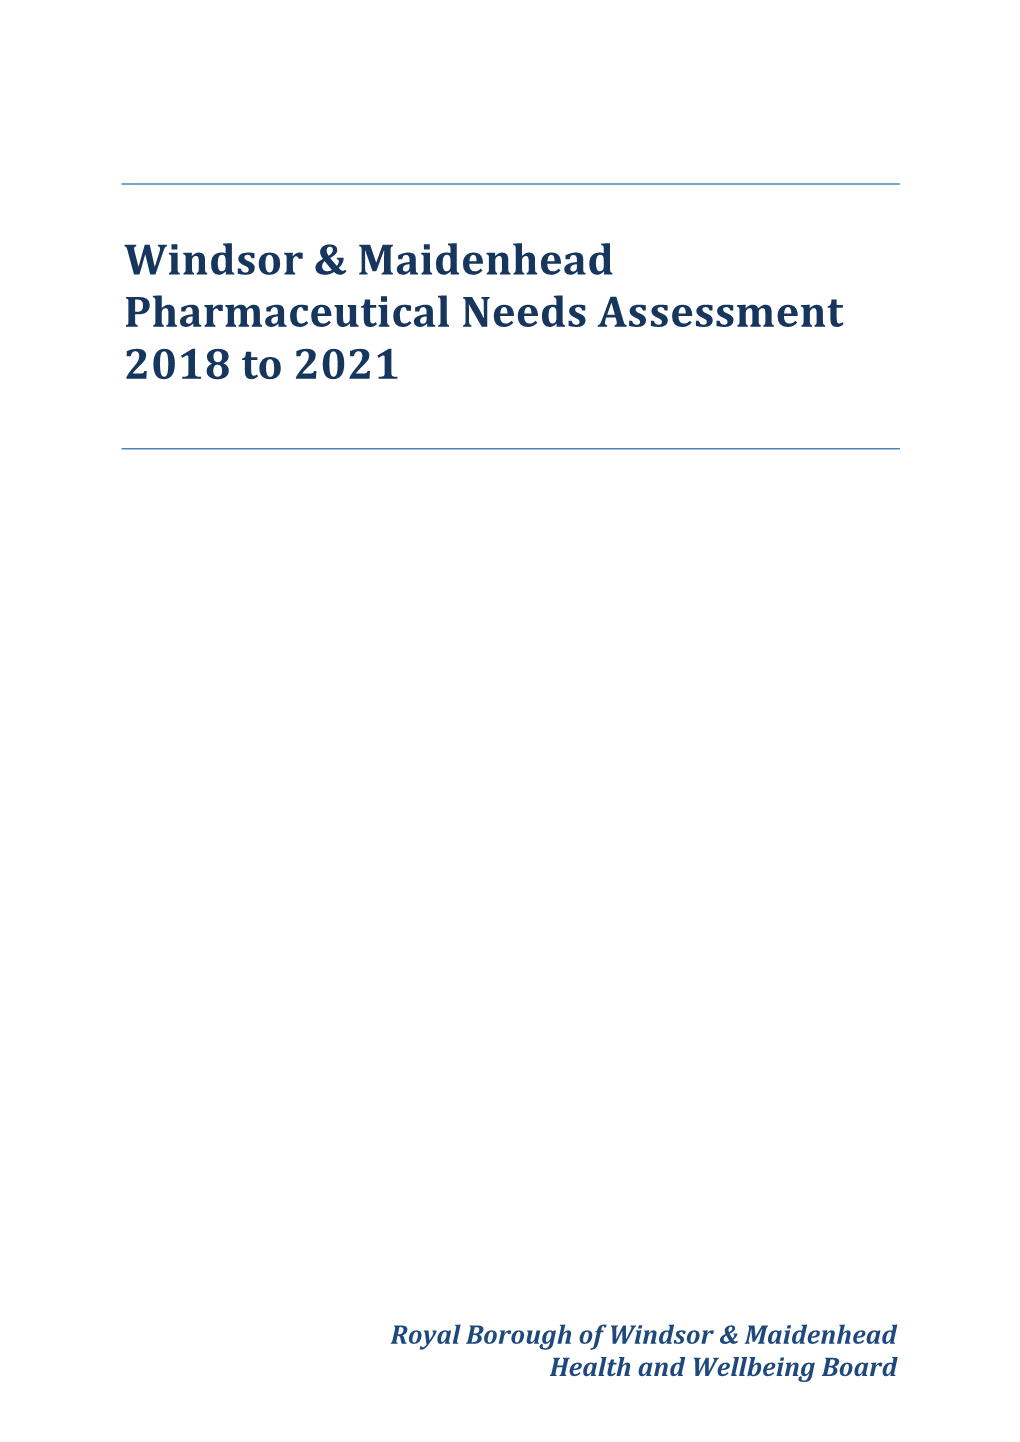 Windsor and Maidenhead PNA 2018 to 2021